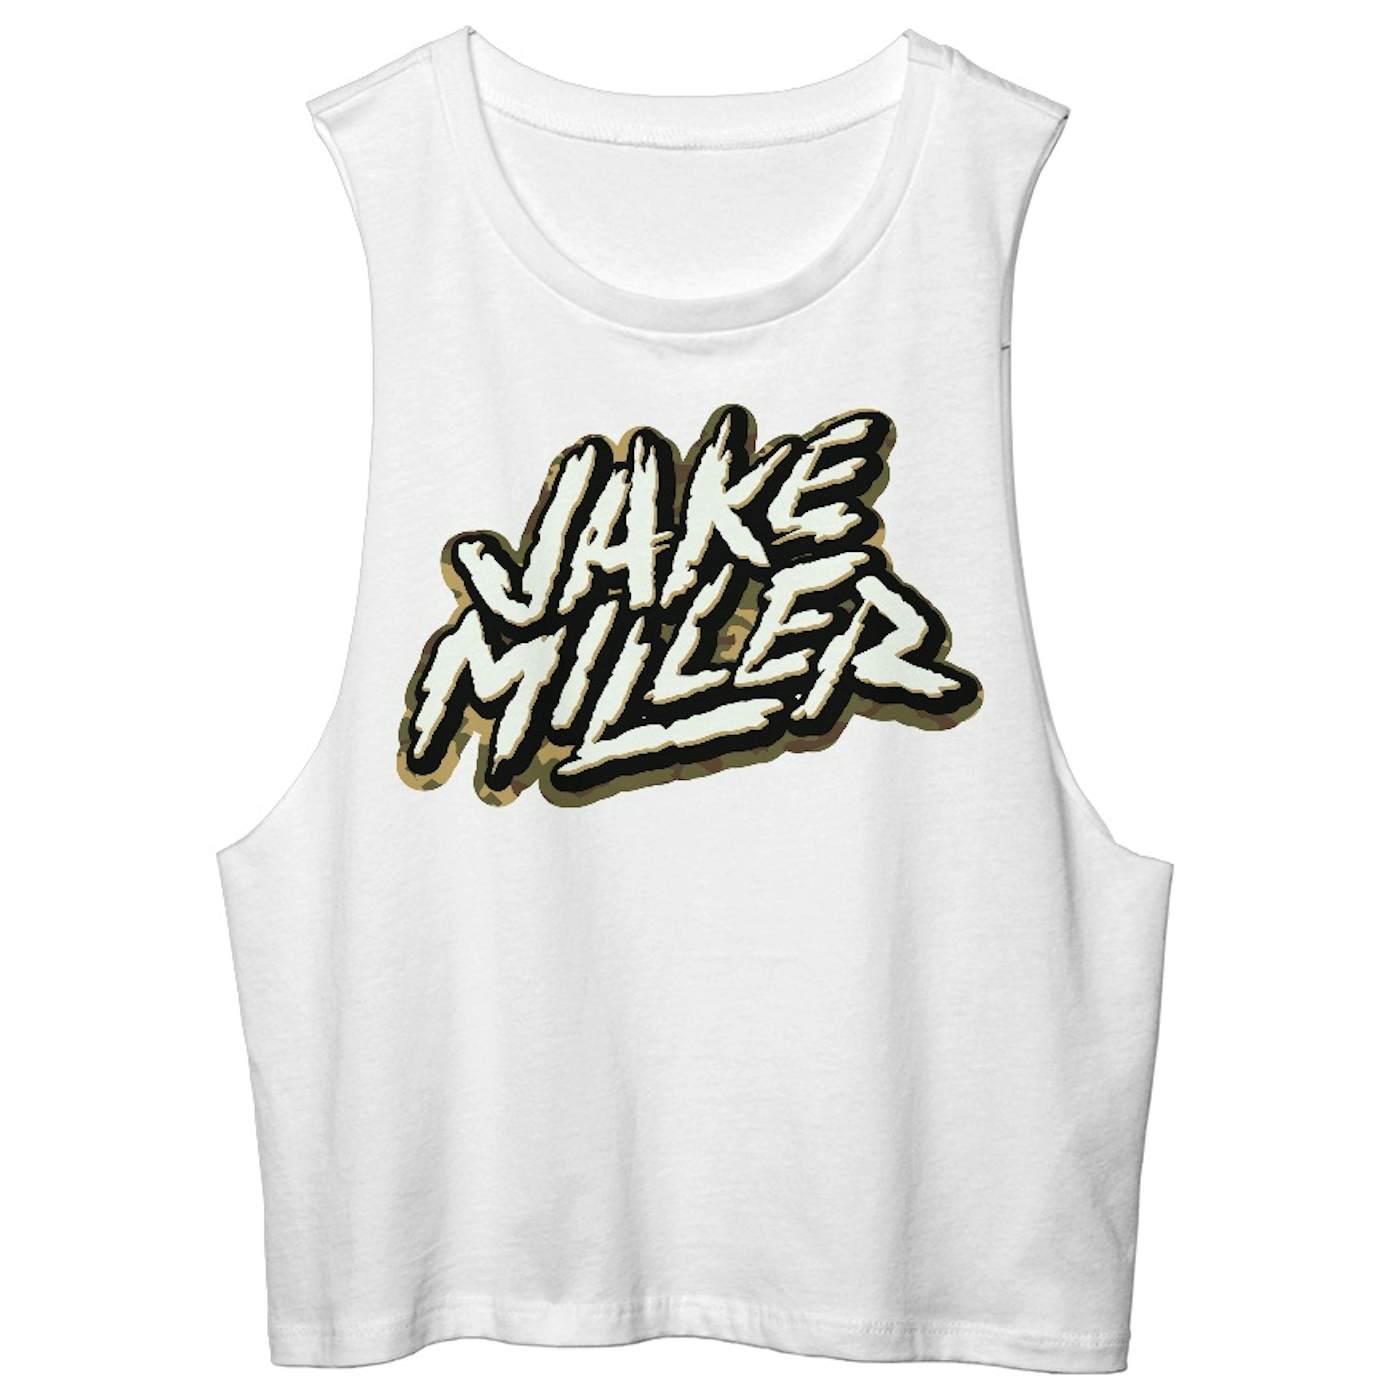 Jake Miller Camo Muscle tank